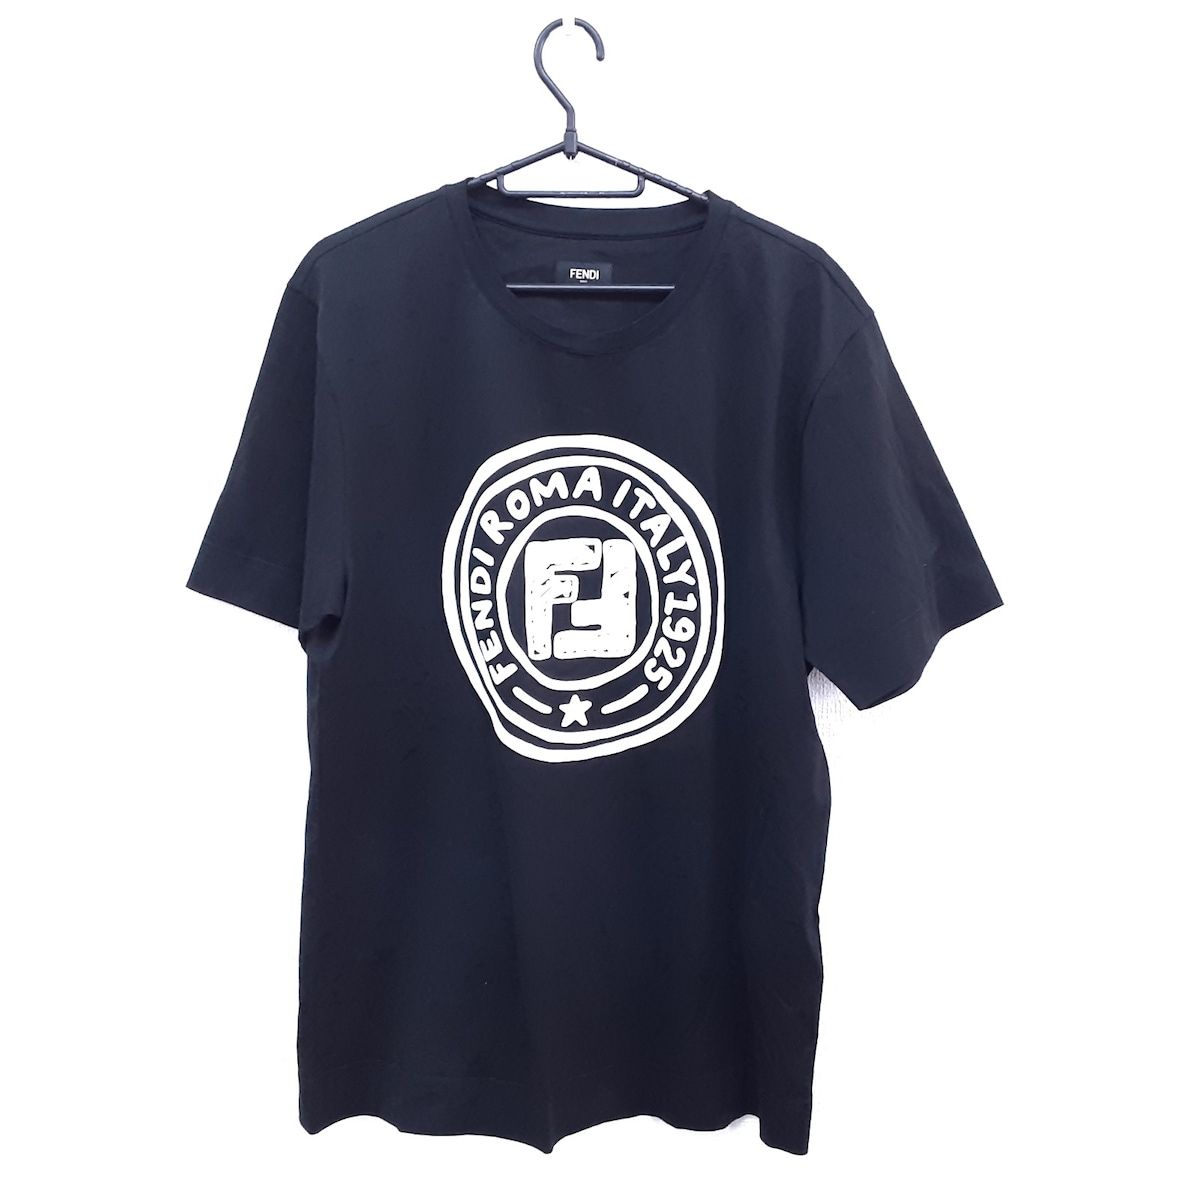 FENDI(フェンディ) 半袖Tシャツ サイズXS メンズ美品 - FY0936 ACNI 黒×白